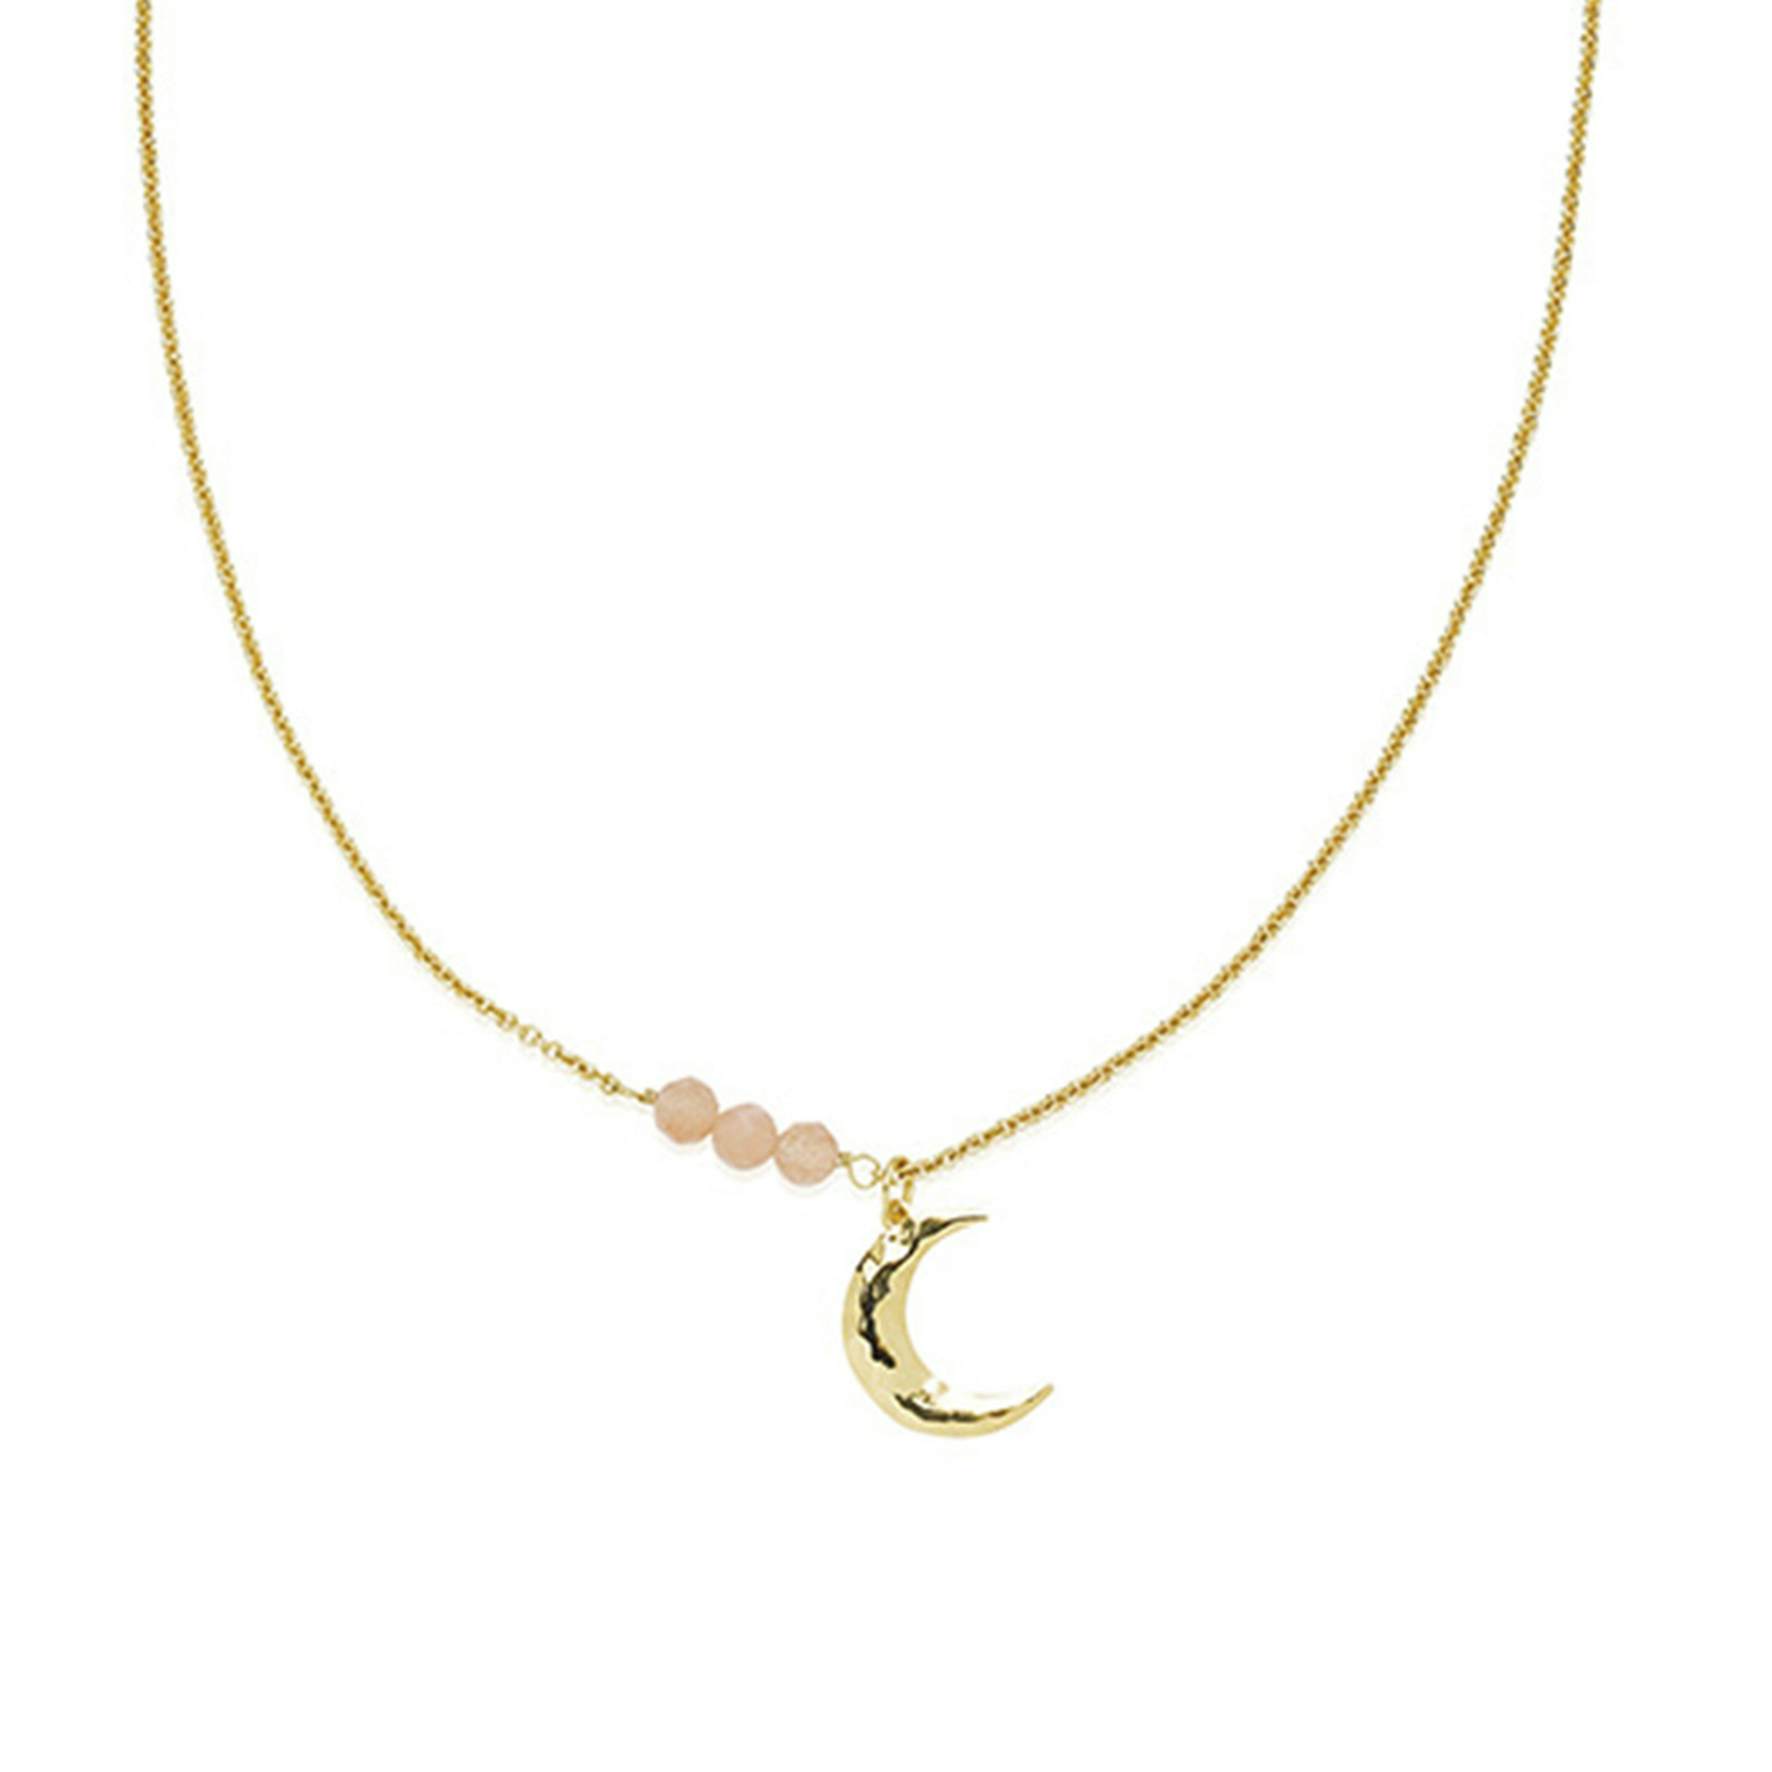 Mie Moltke Necklace With Moon And Pearls fra Izabel Camille i Forgylt-Sølv Sterling 925